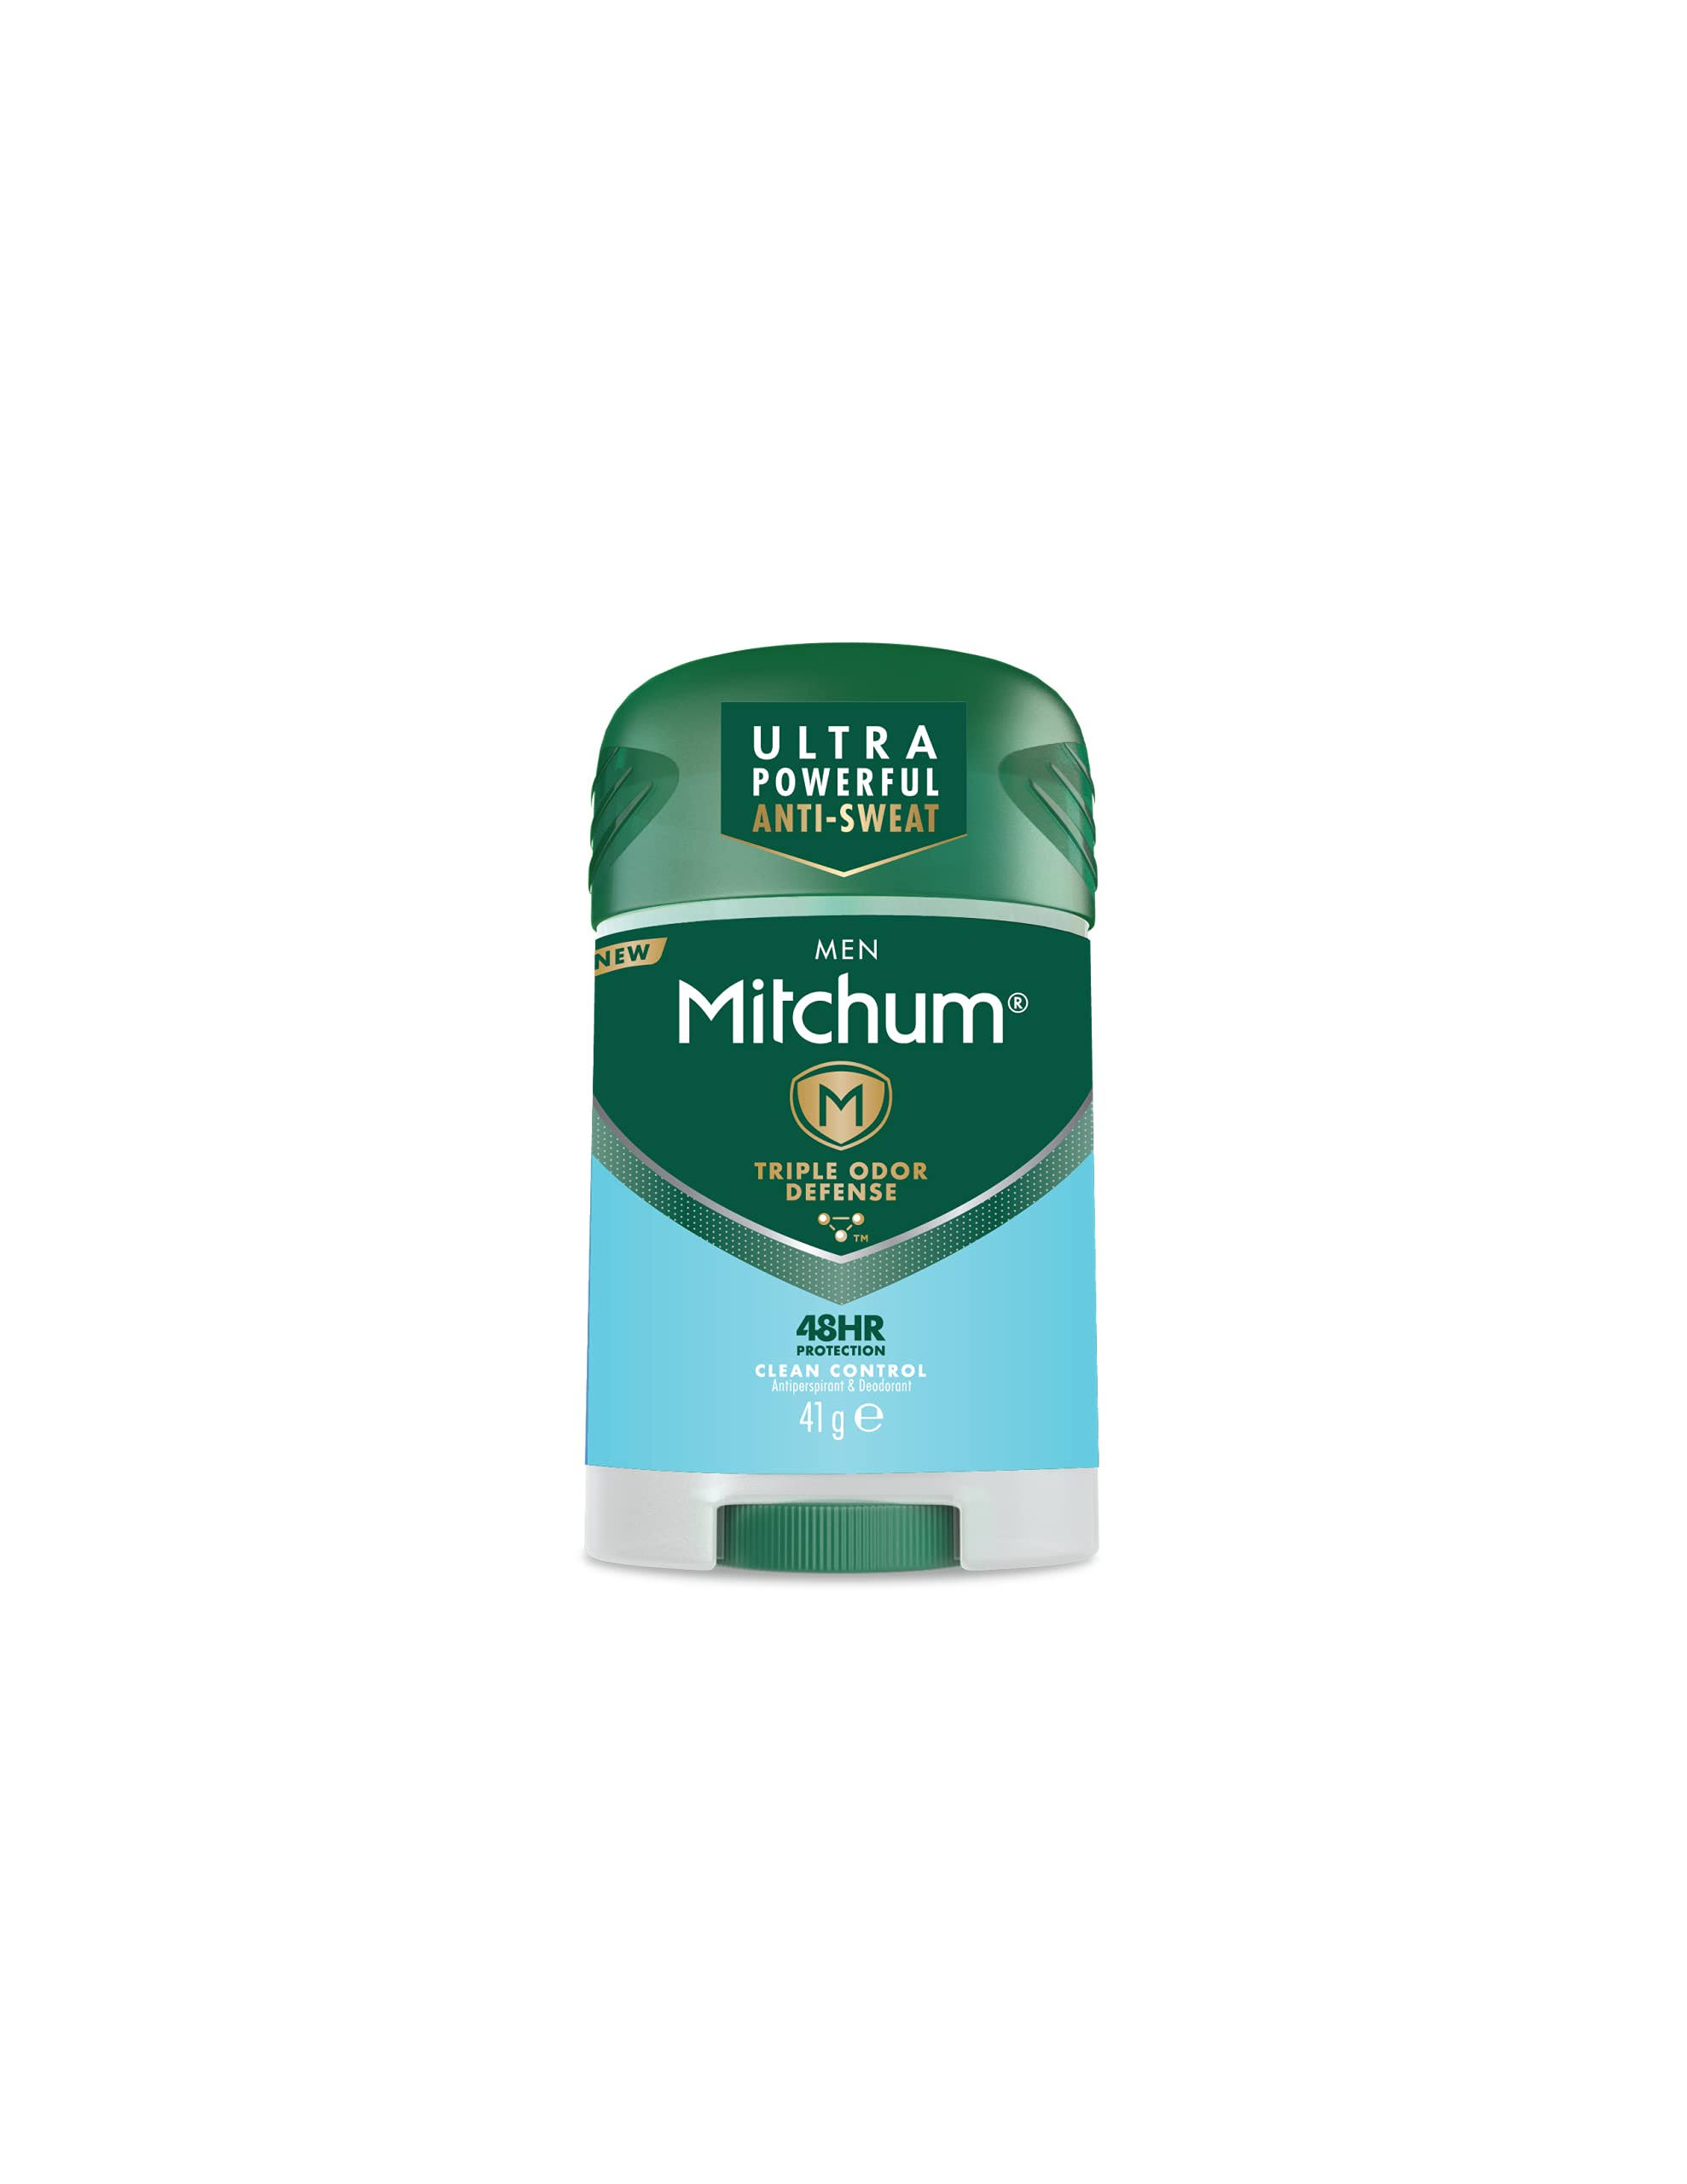 Mitchum Men Triple Odor Defense 48hr Protection Antiperspirant and Deodorant - Clean Control, 41g